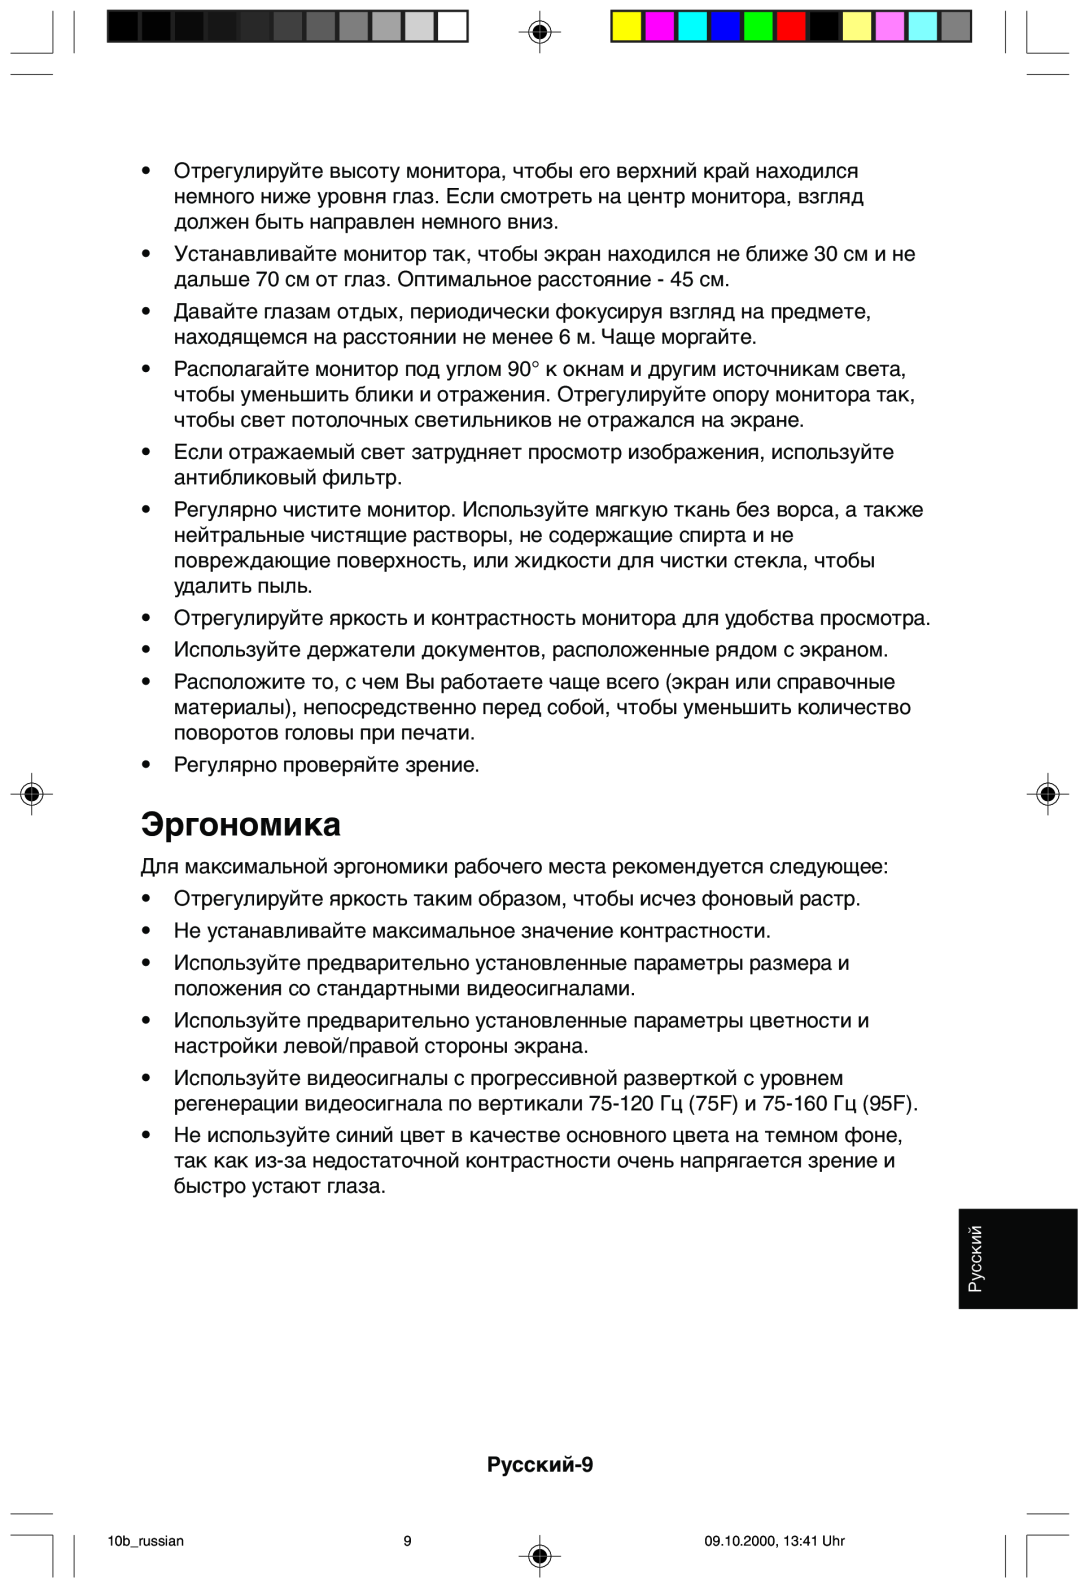 NEC 95F user manual Эргономика, Русский-9 